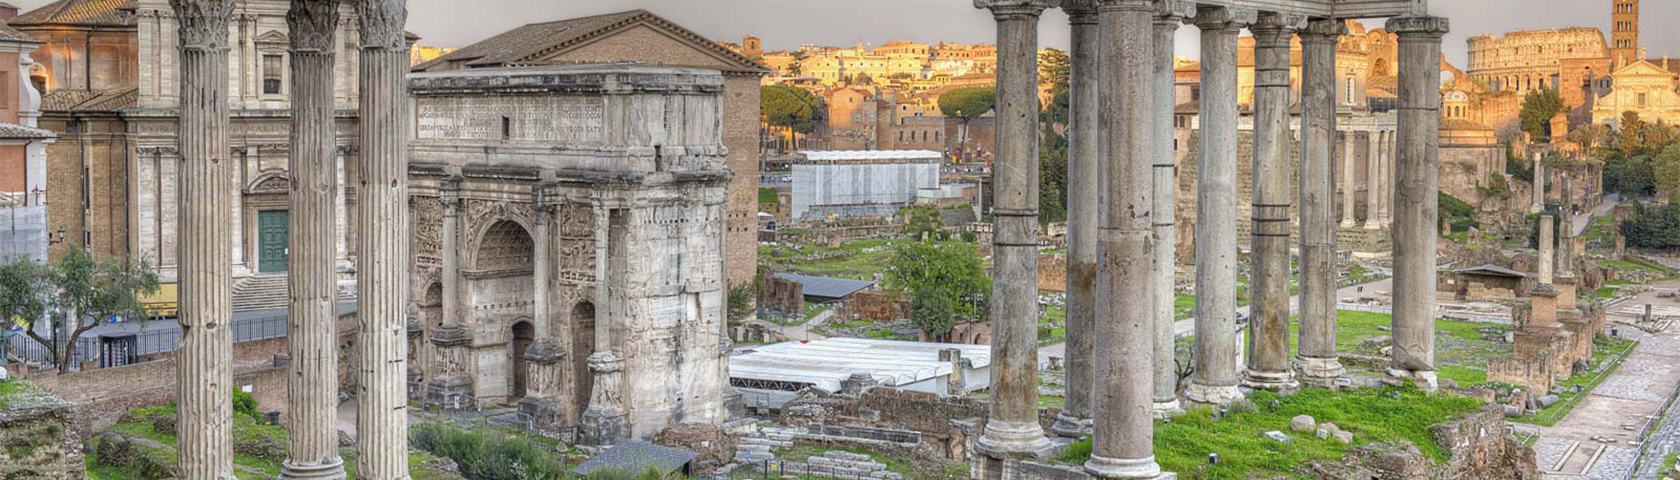 Temple of Saturn ruins, Rome, Roman Forum